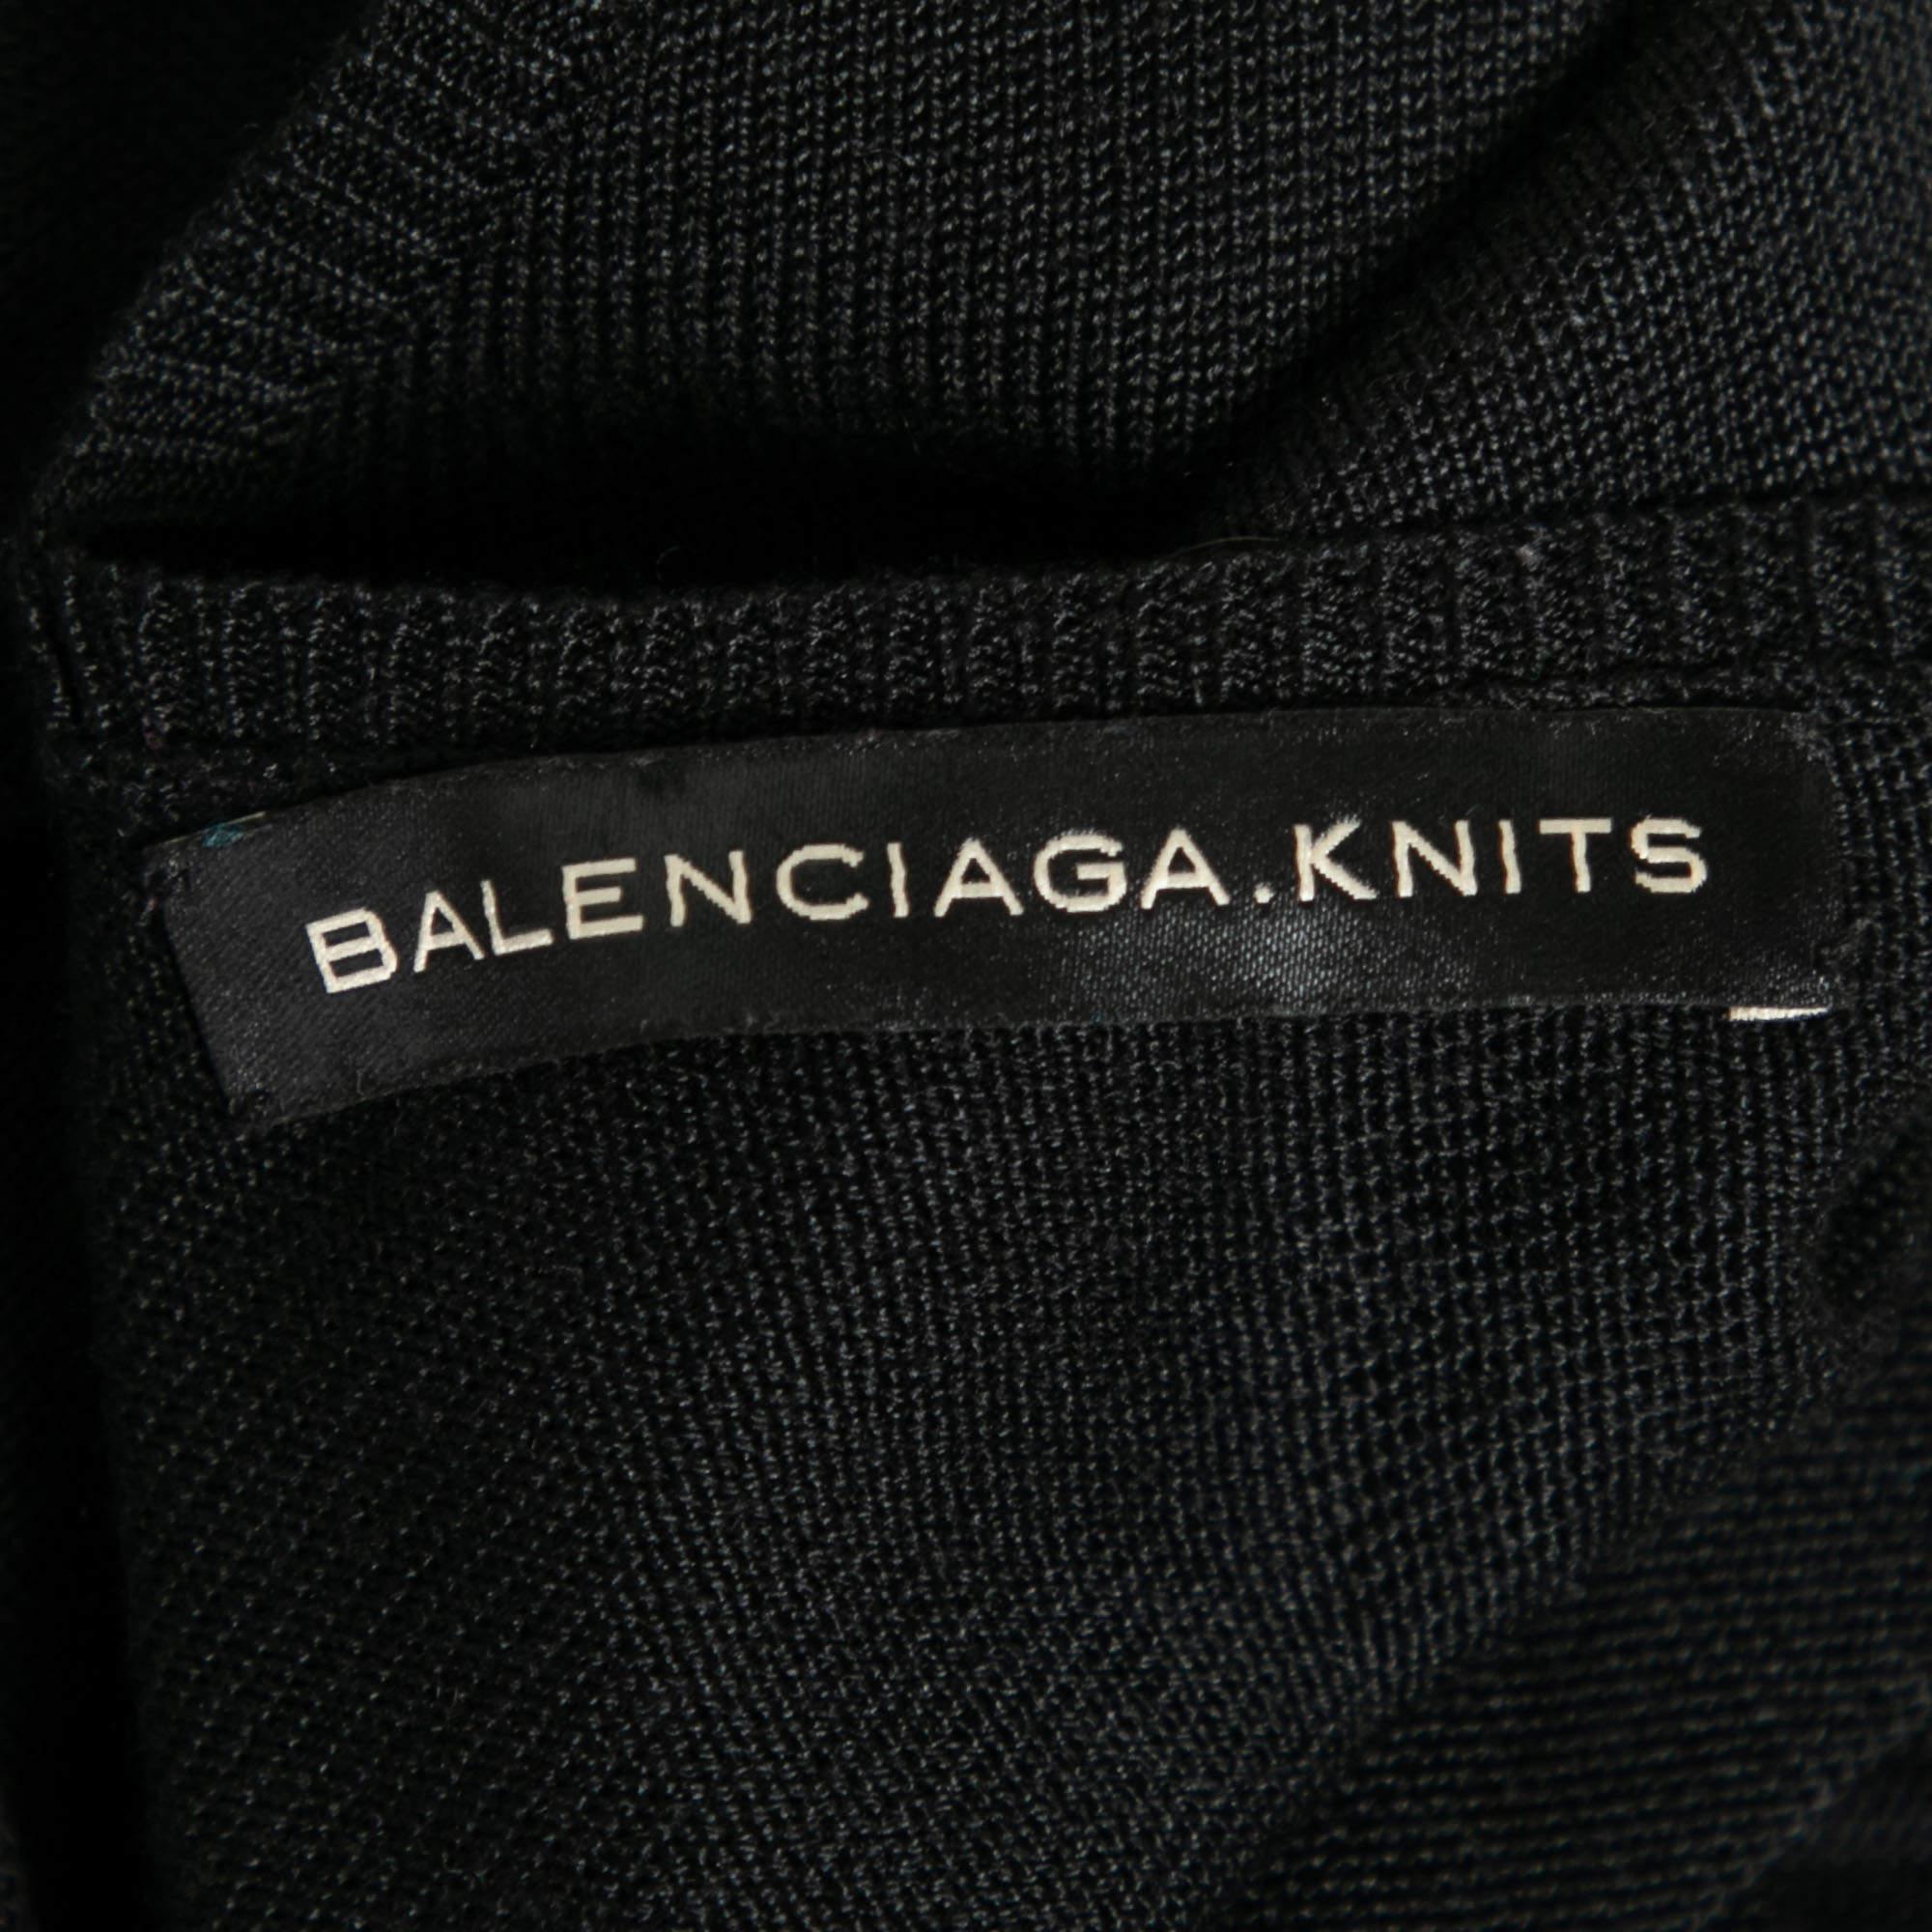 Balenciaga Back Silk Knit Low Back Long Sleeve Dress S In Good Condition For Sale In Dubai, Al Qouz 2